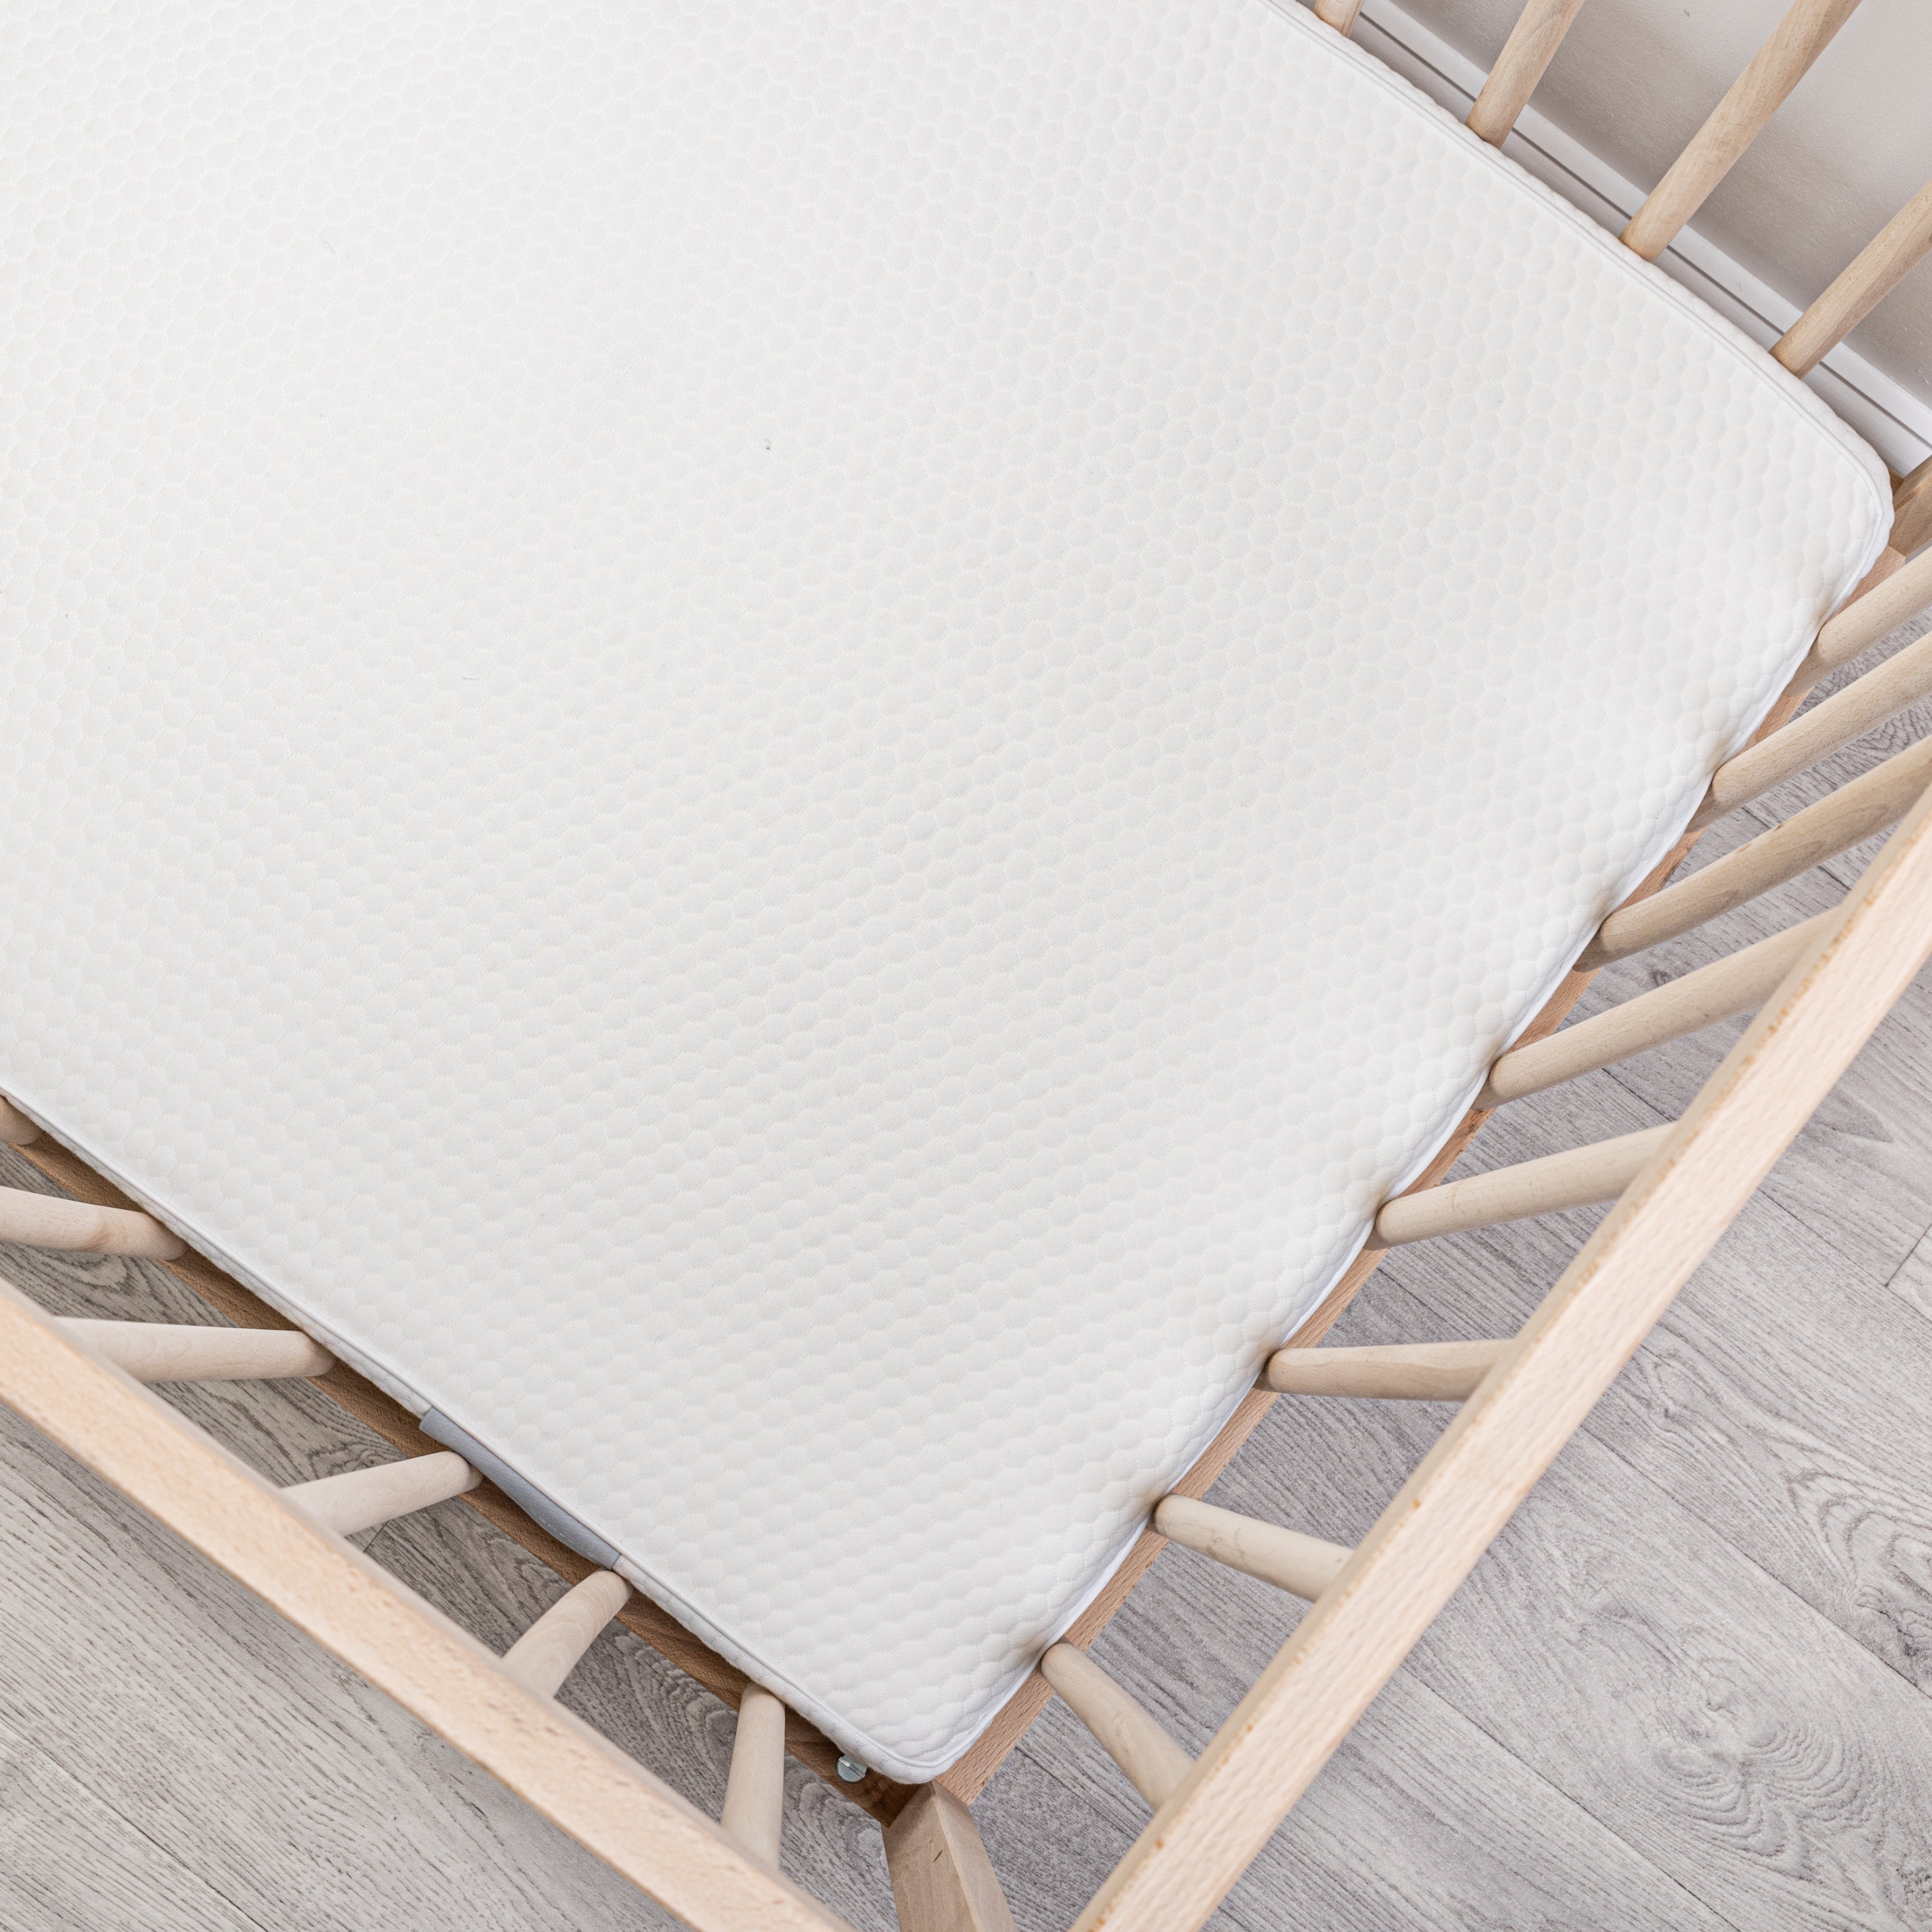 Tiny Dreamer™ - Premium Foam Cot Bed Mattress (140x 70cm) - The Tiny Bed Company™